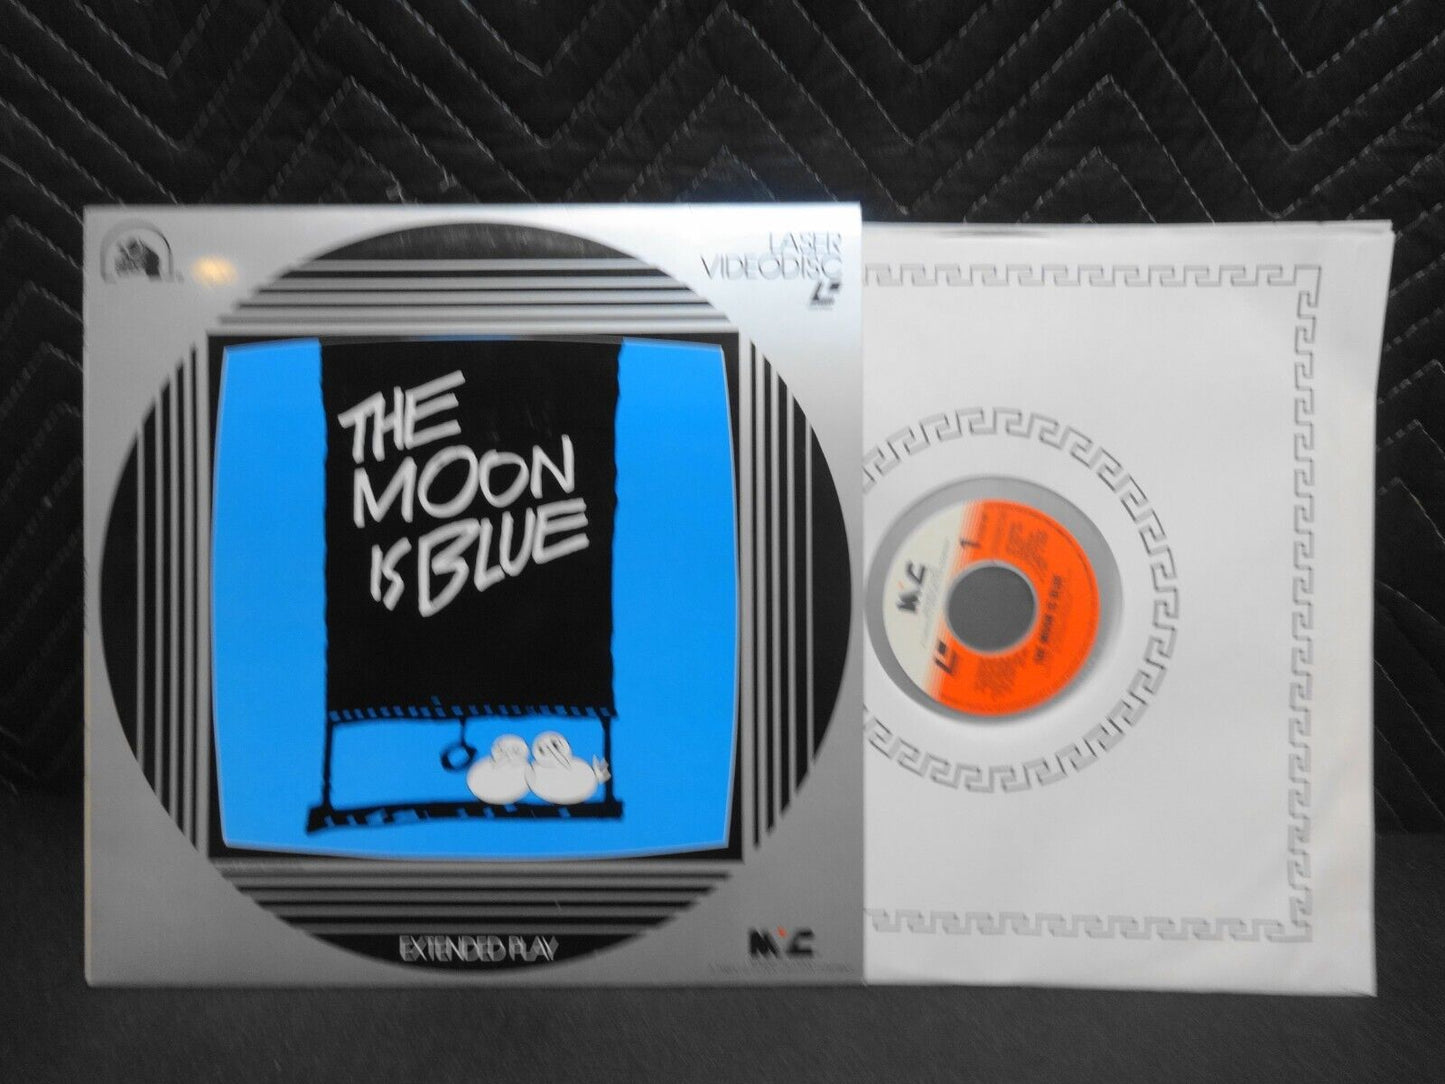 THE MOON IS BLUE - Laserdisc - William Holden